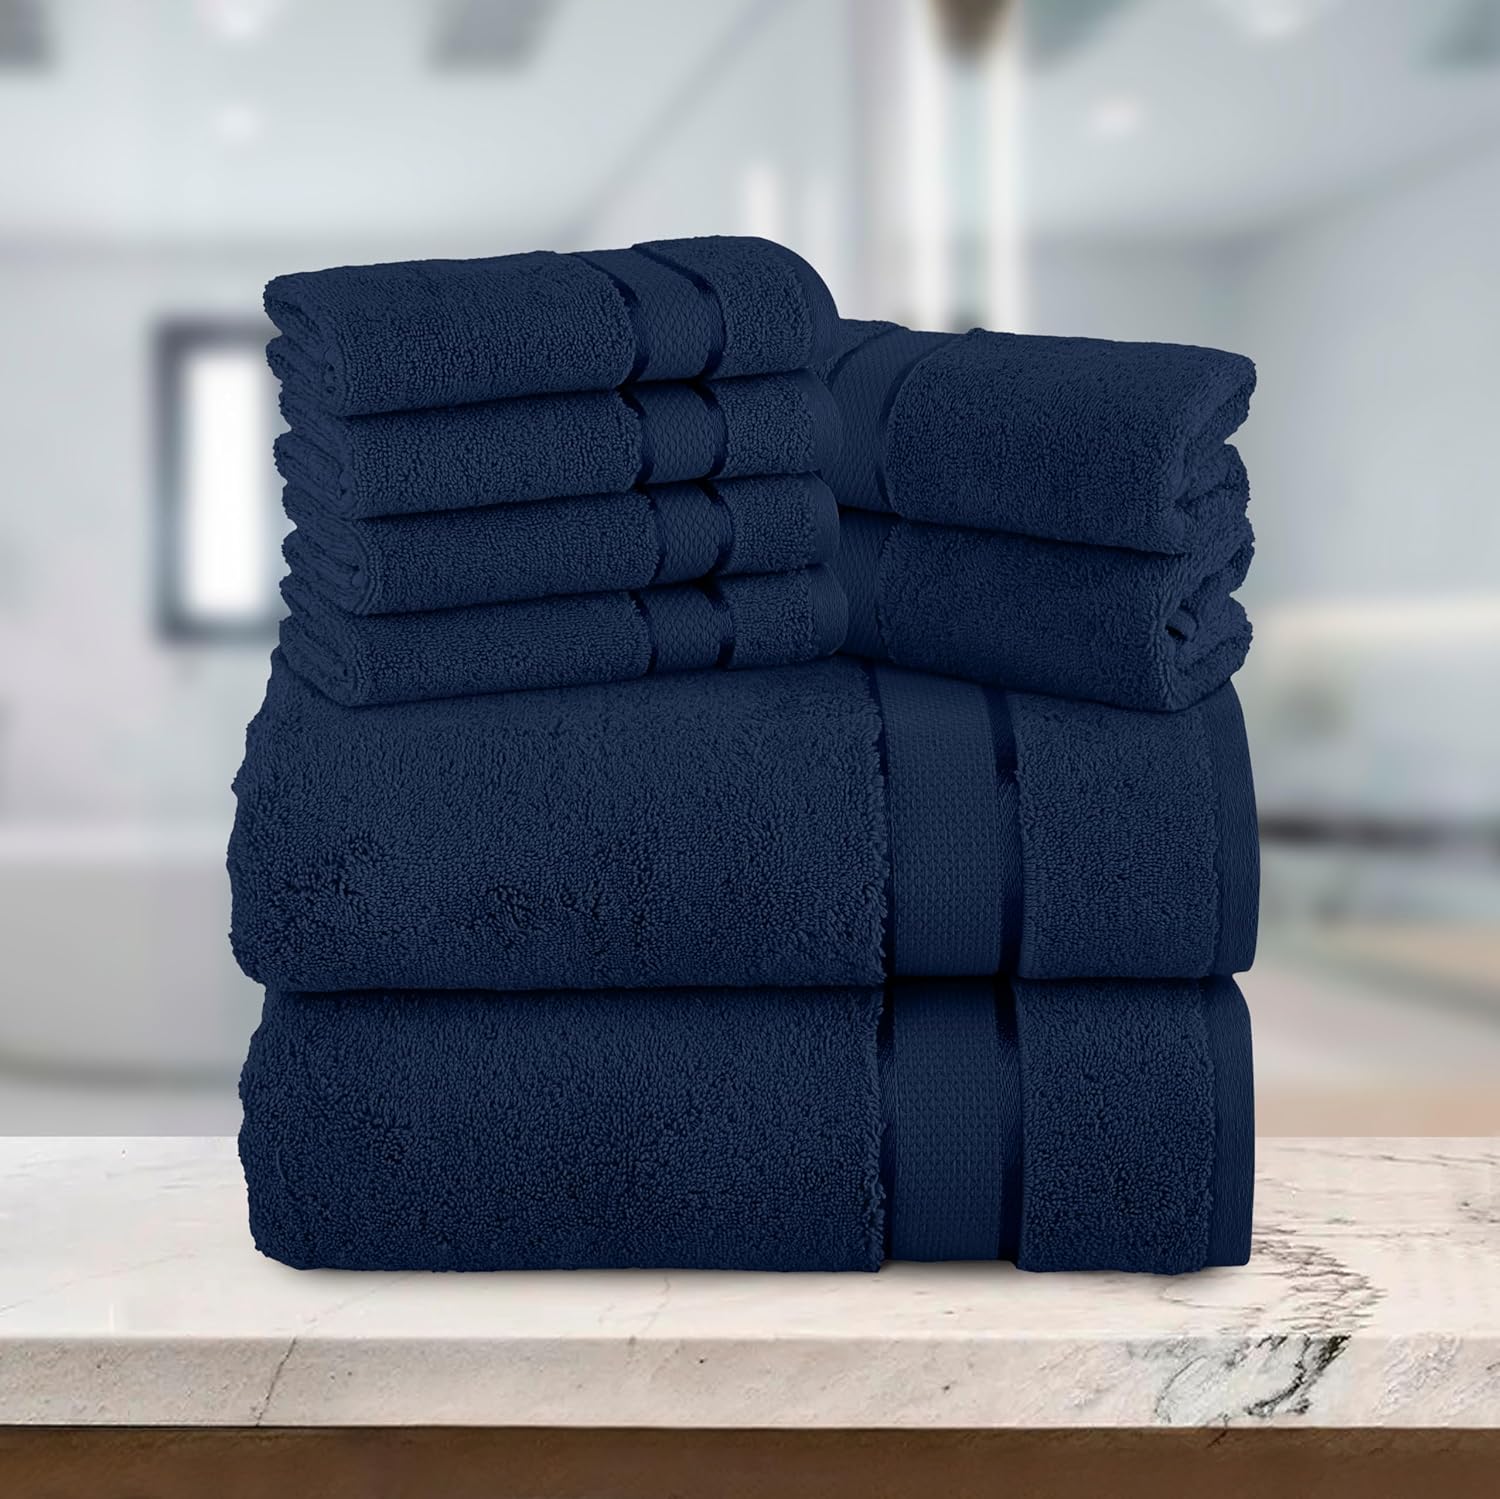 Home Labels 8 Pack Bath Towel Set Navy Blue for Kitchen and Bath - Pre